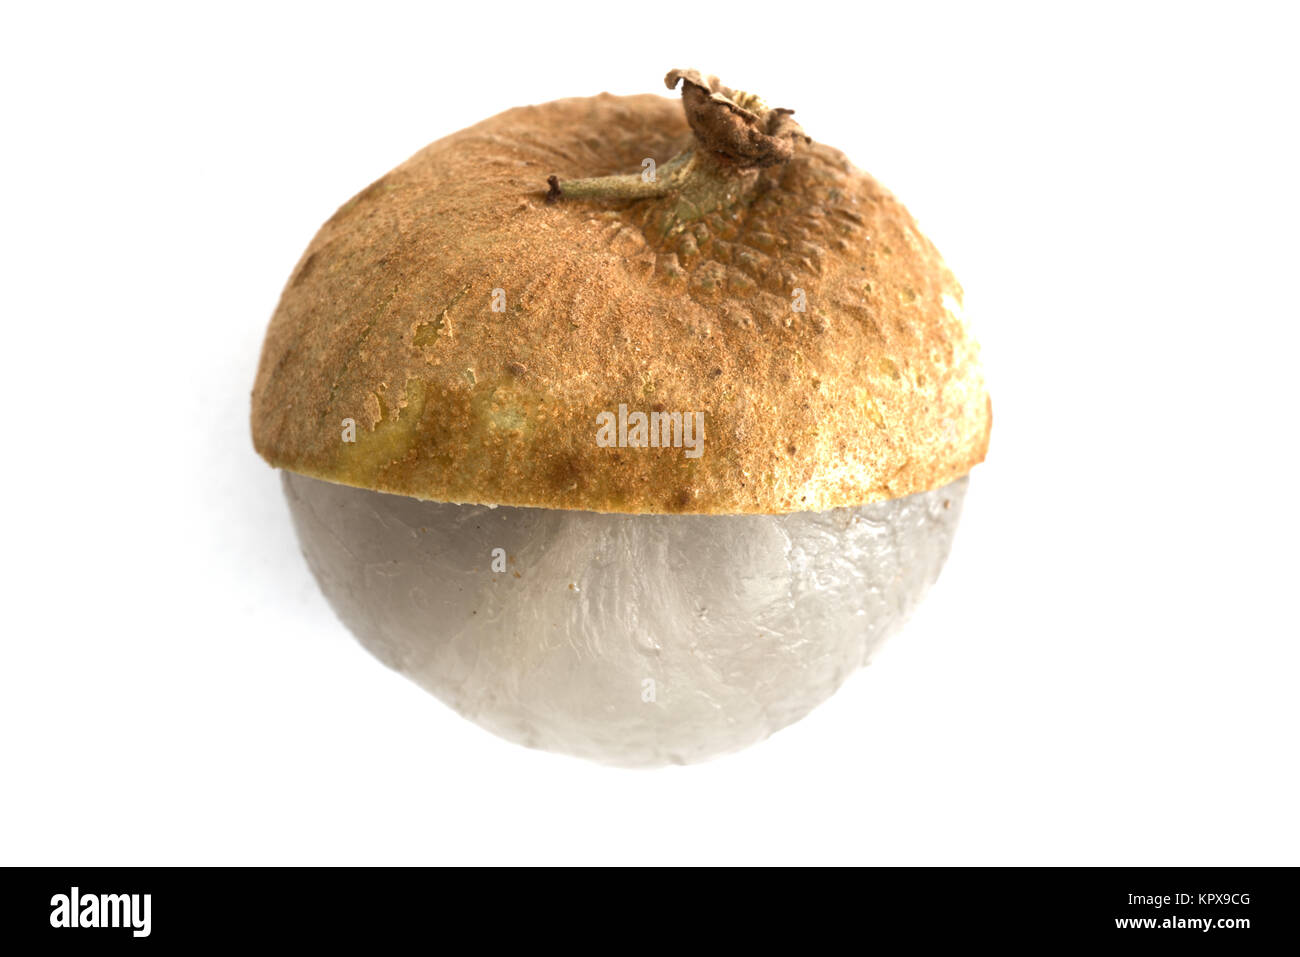 Pezzo unico Dimocarpus Longan frutta con semi sheel peel mostrando carne traslucido isolato su sfondo bianco Foto Stock